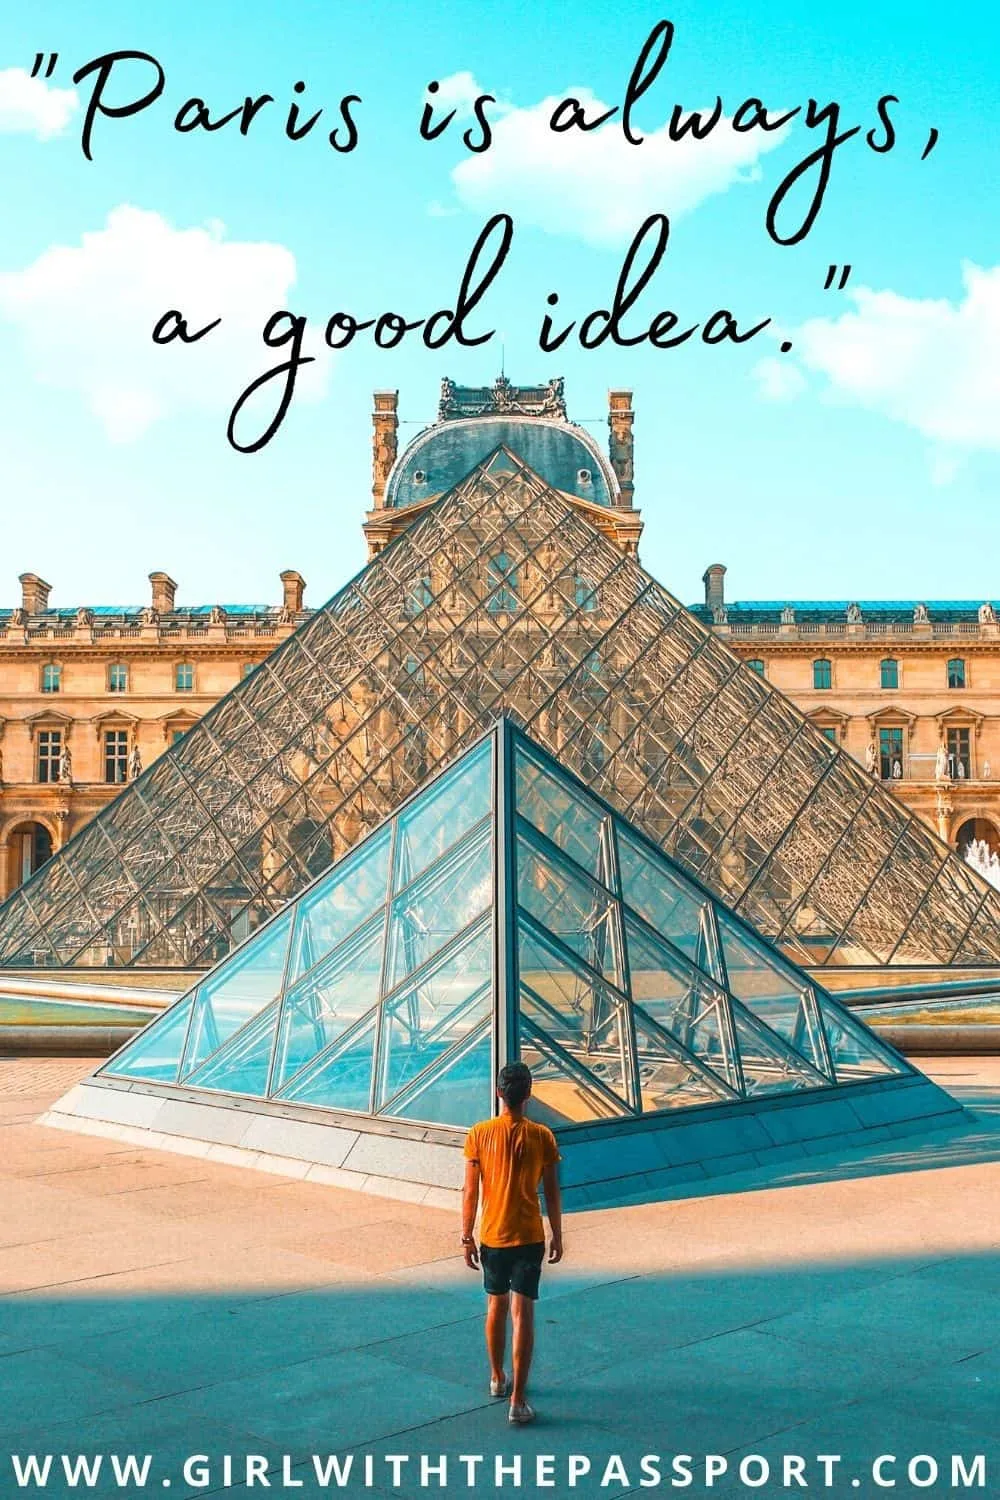 130+ Epic and Amazing Paris Captions for Instagram!